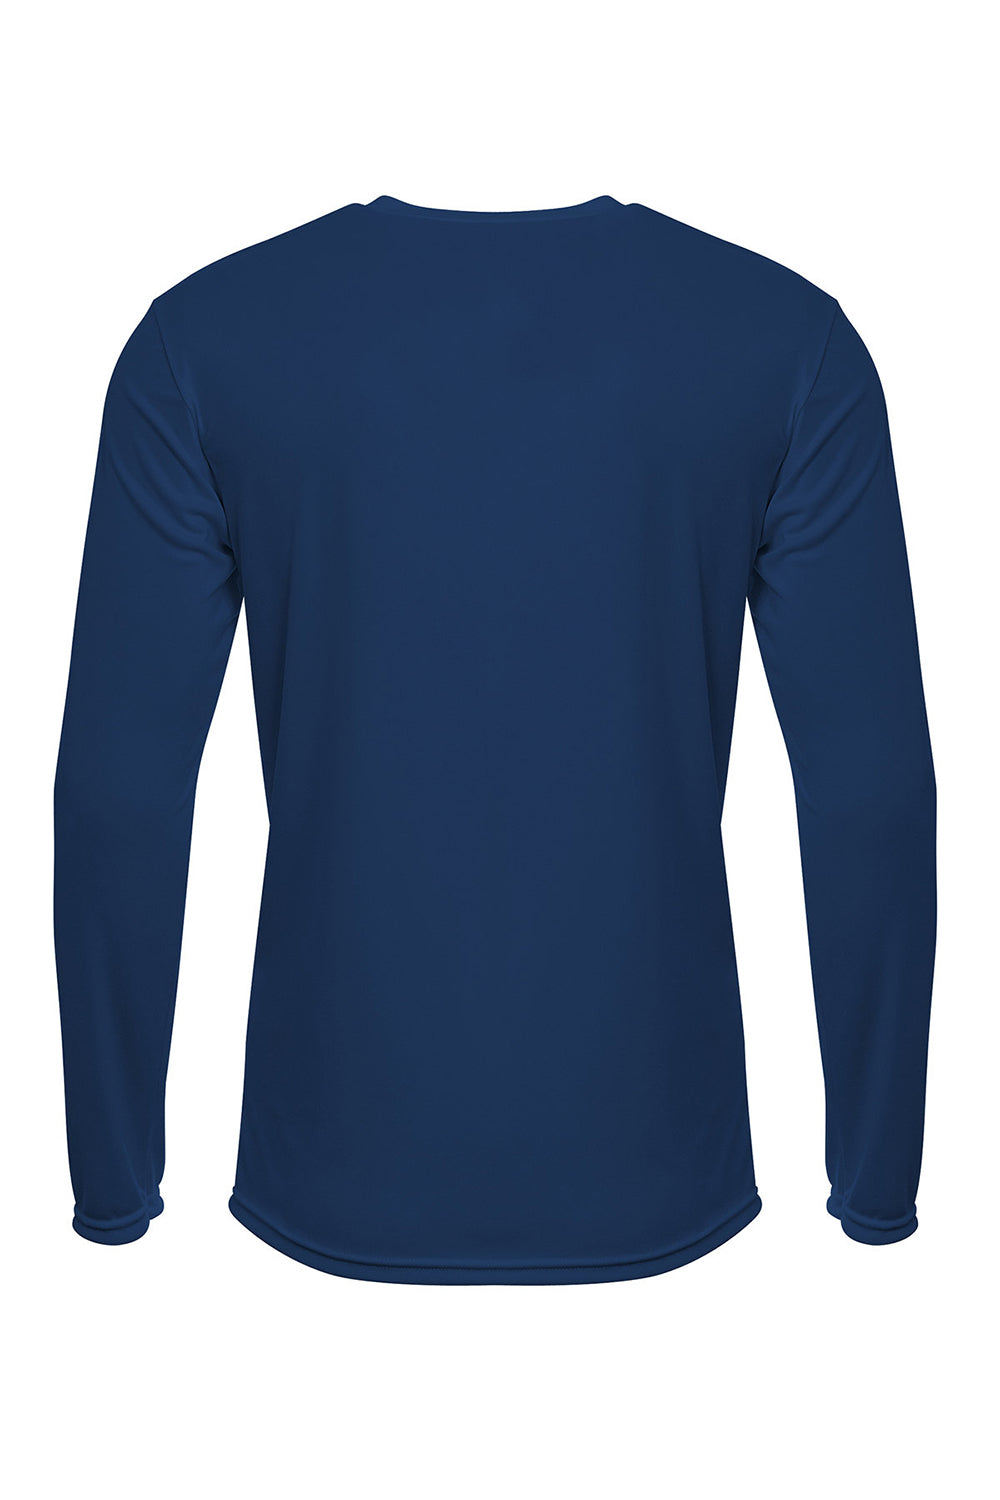 A4 N3425 Mens Sprint Moisture Wicking Long Sleeve Crewneck T-Shirt Navy Blue Flat Back